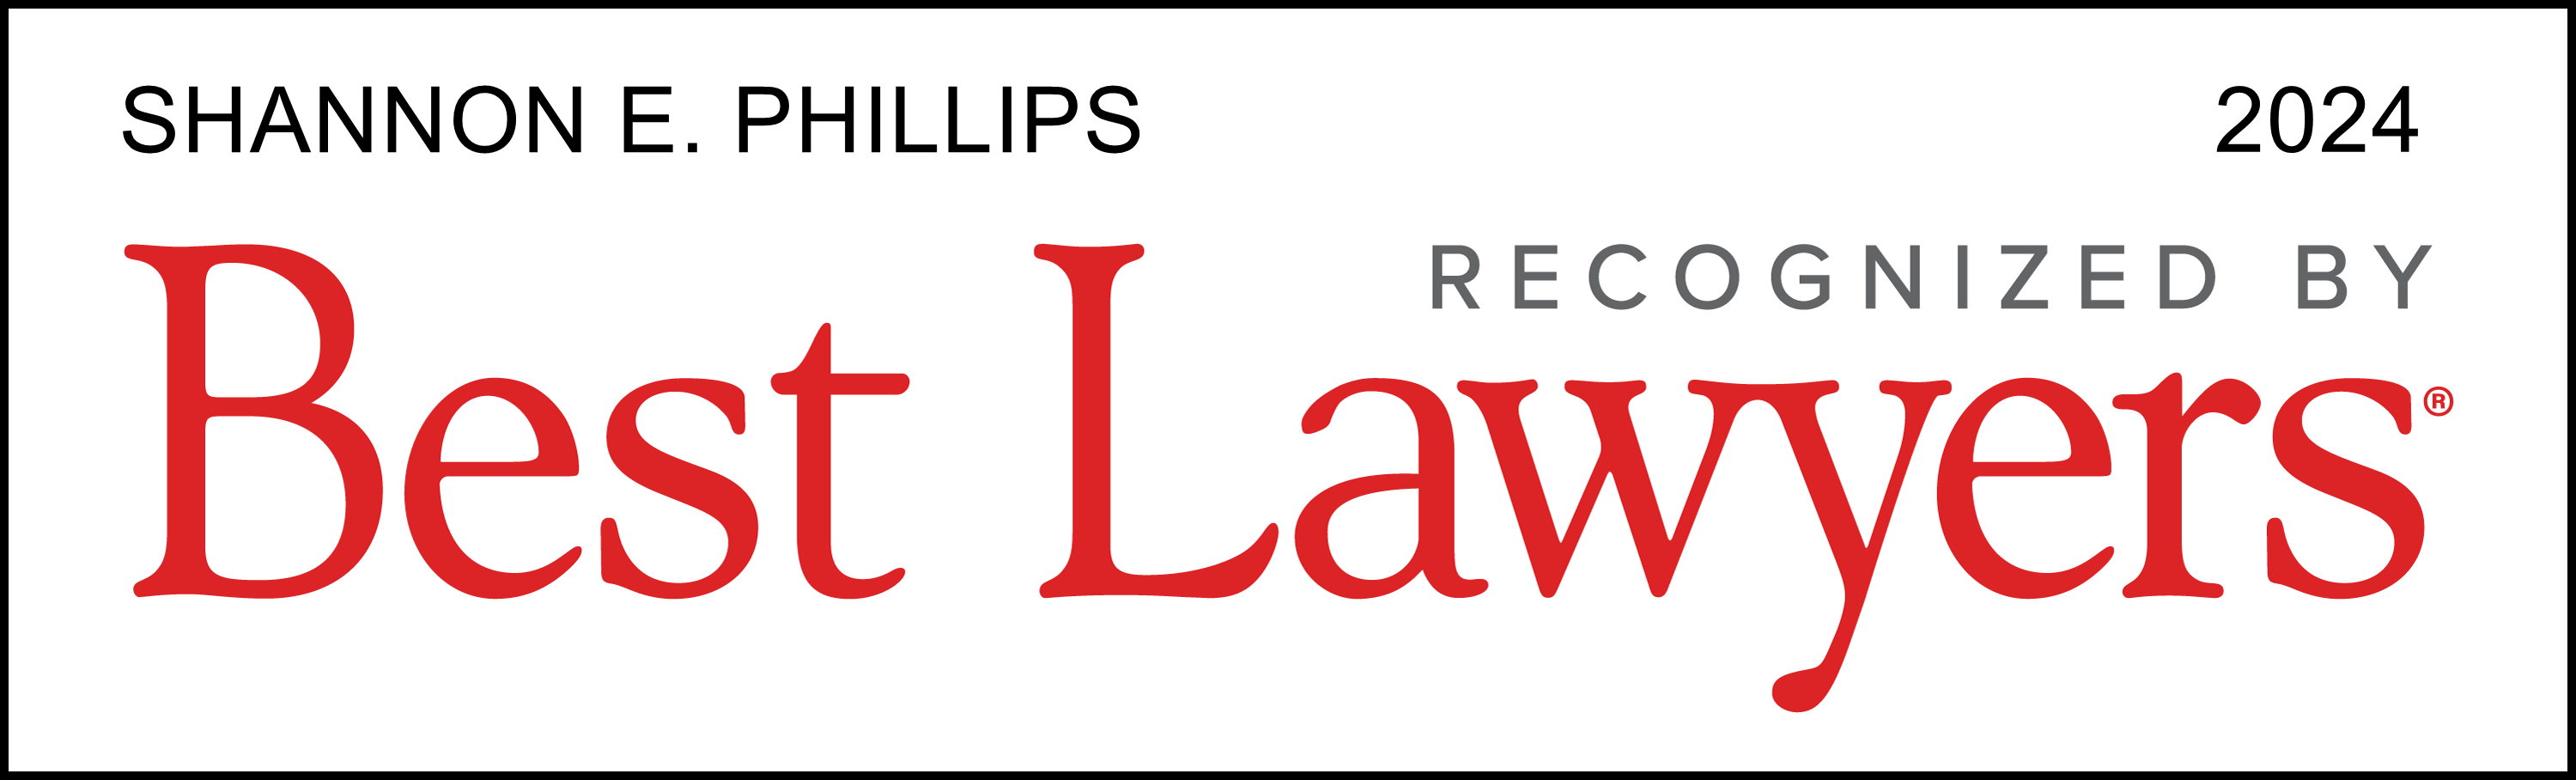 Phillips_Shannon_Best Lawyers 2024